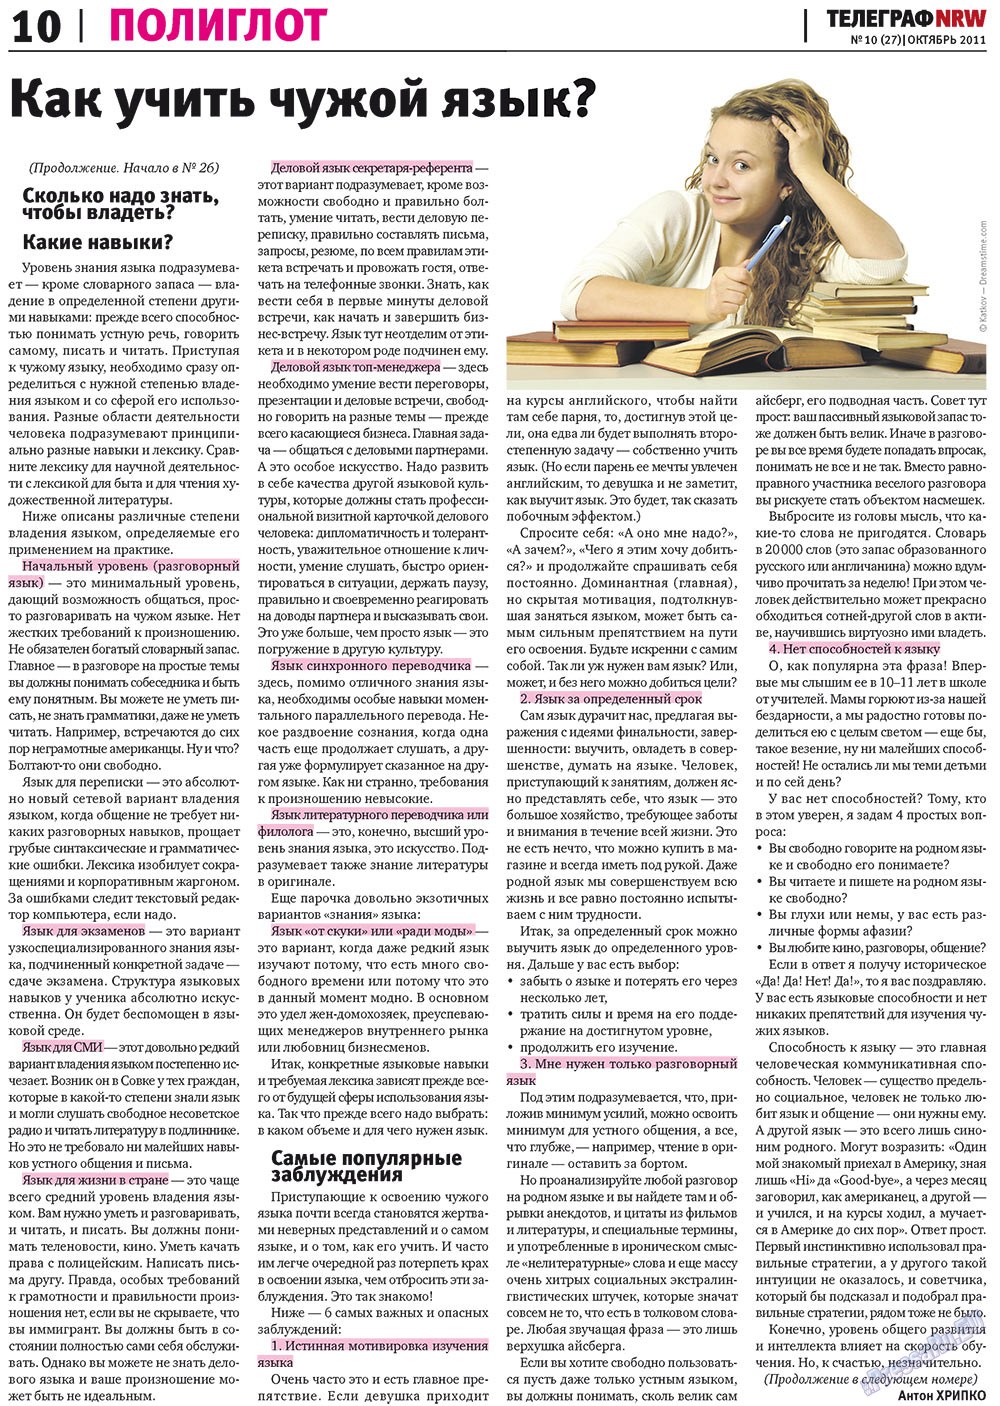 Телеграф NRW, газета. 2011 №10 стр.10